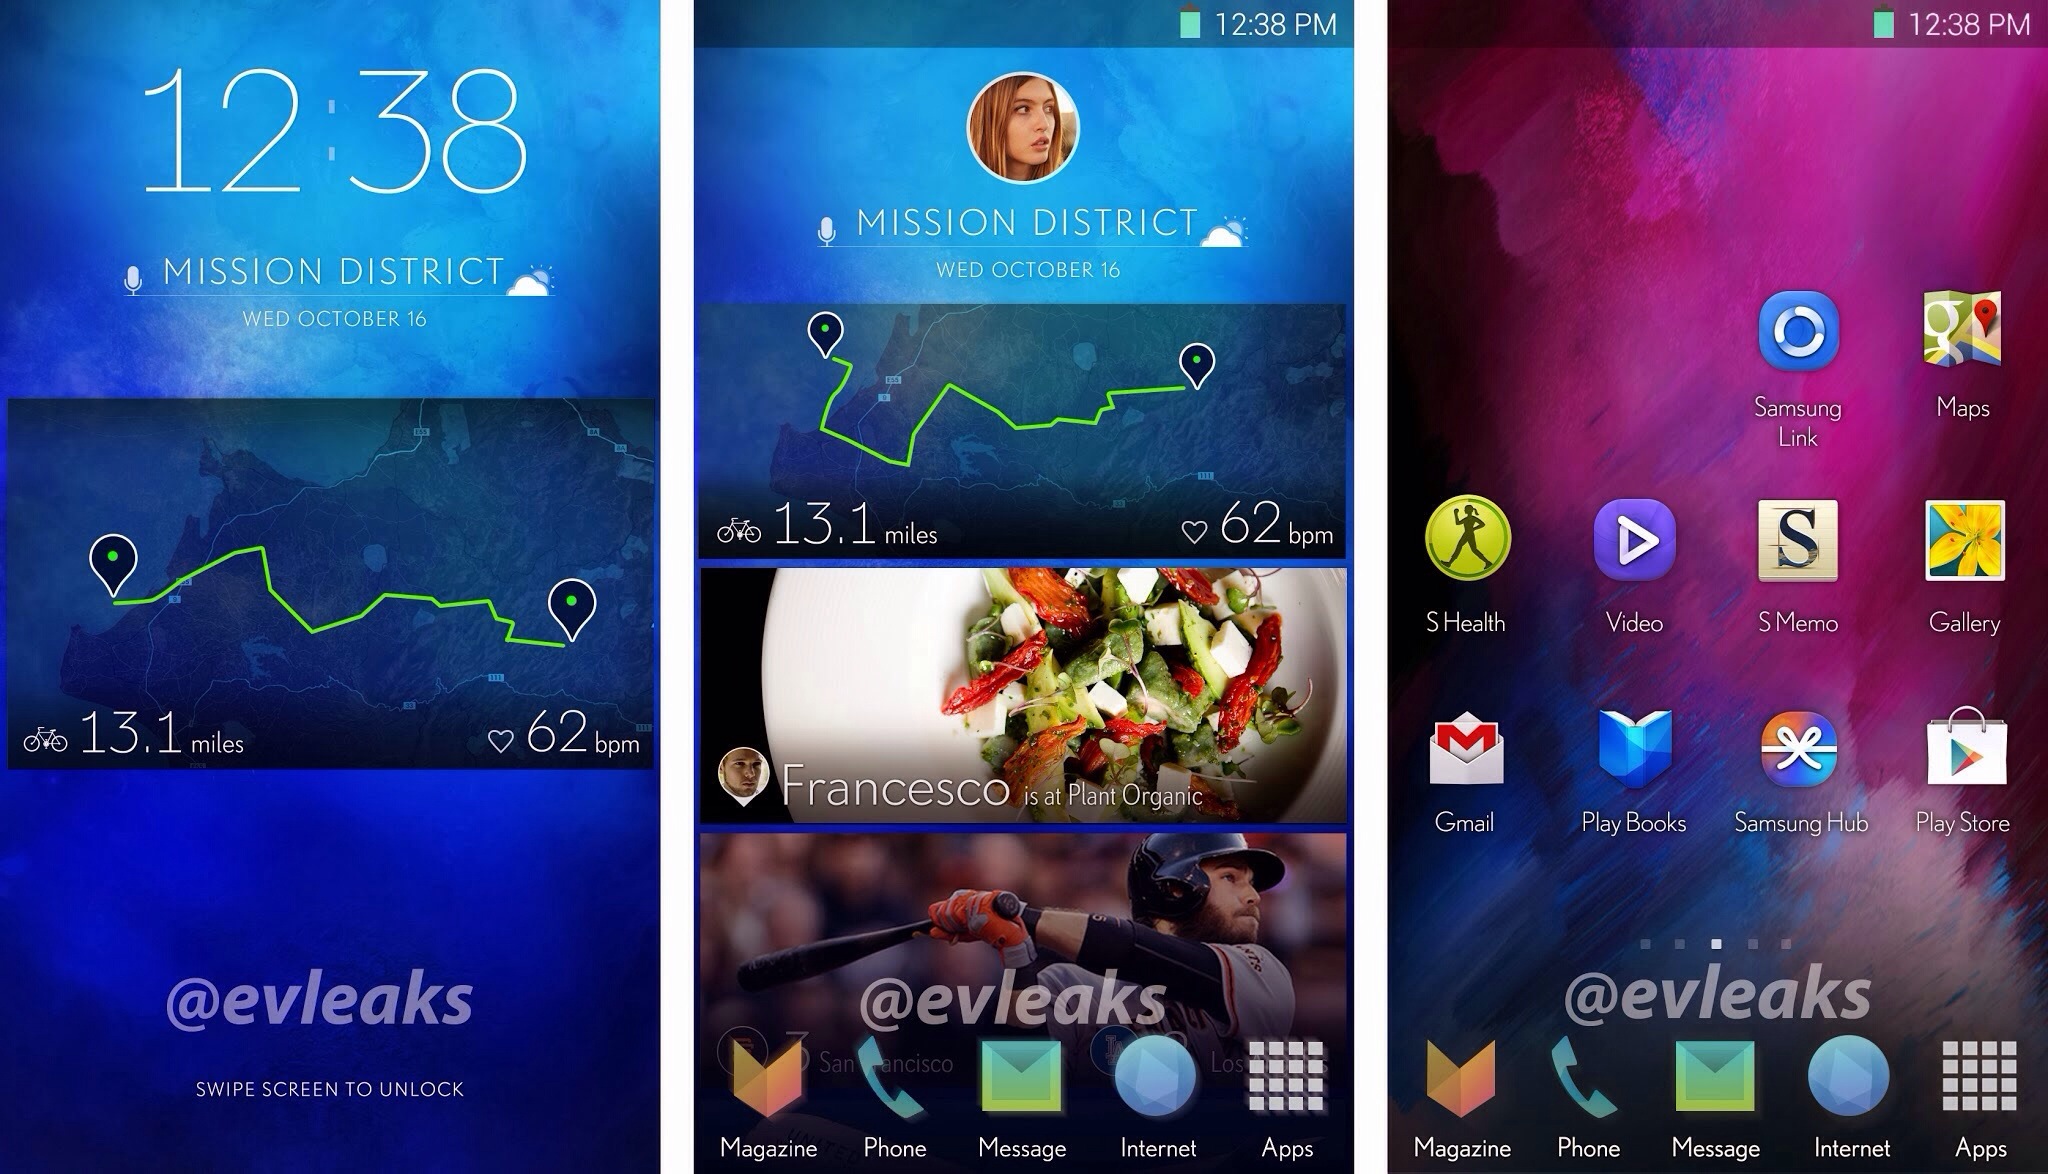 20140107 212846 - LEAKED : Samsung's new Touchwiz UI